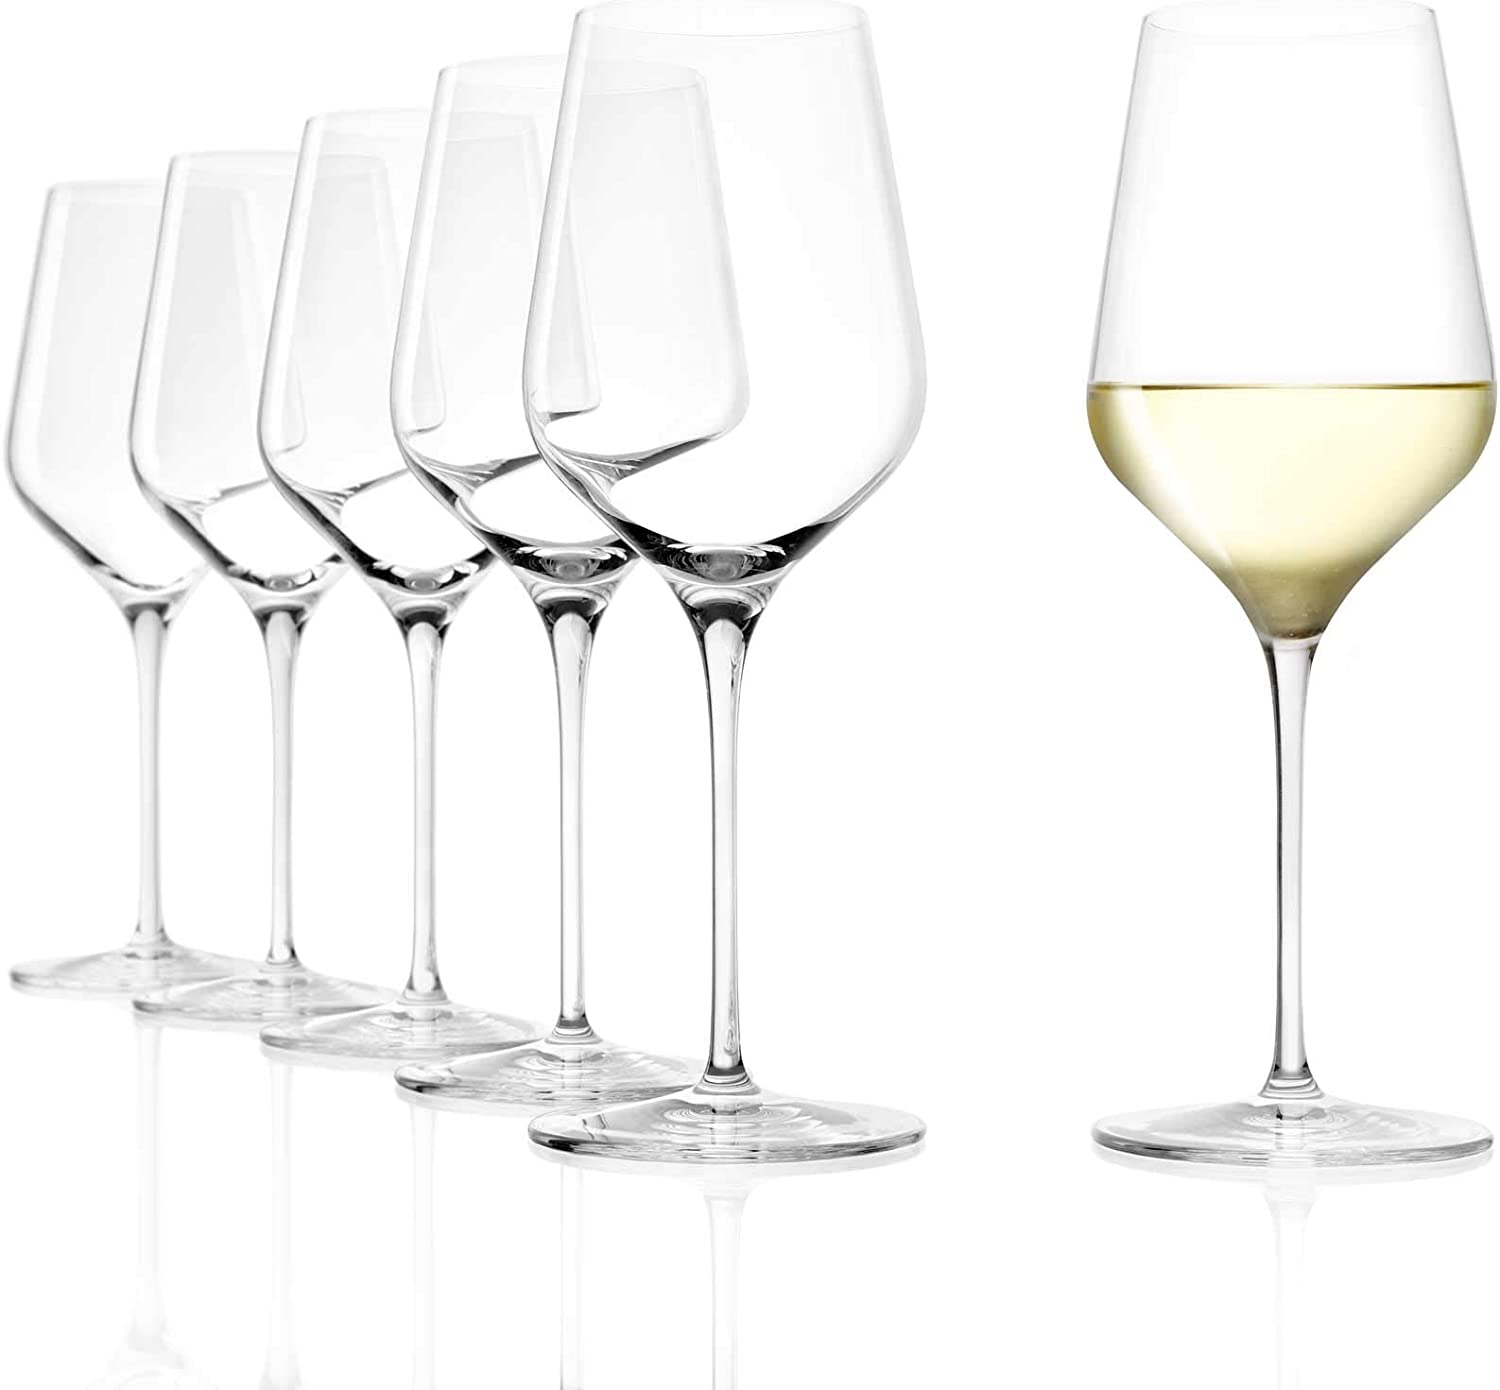 Stölzle Lausitz Starlight Glasses Wine Glasses Highly Functional Wine Goblets Dishwasher Safe Set of 6